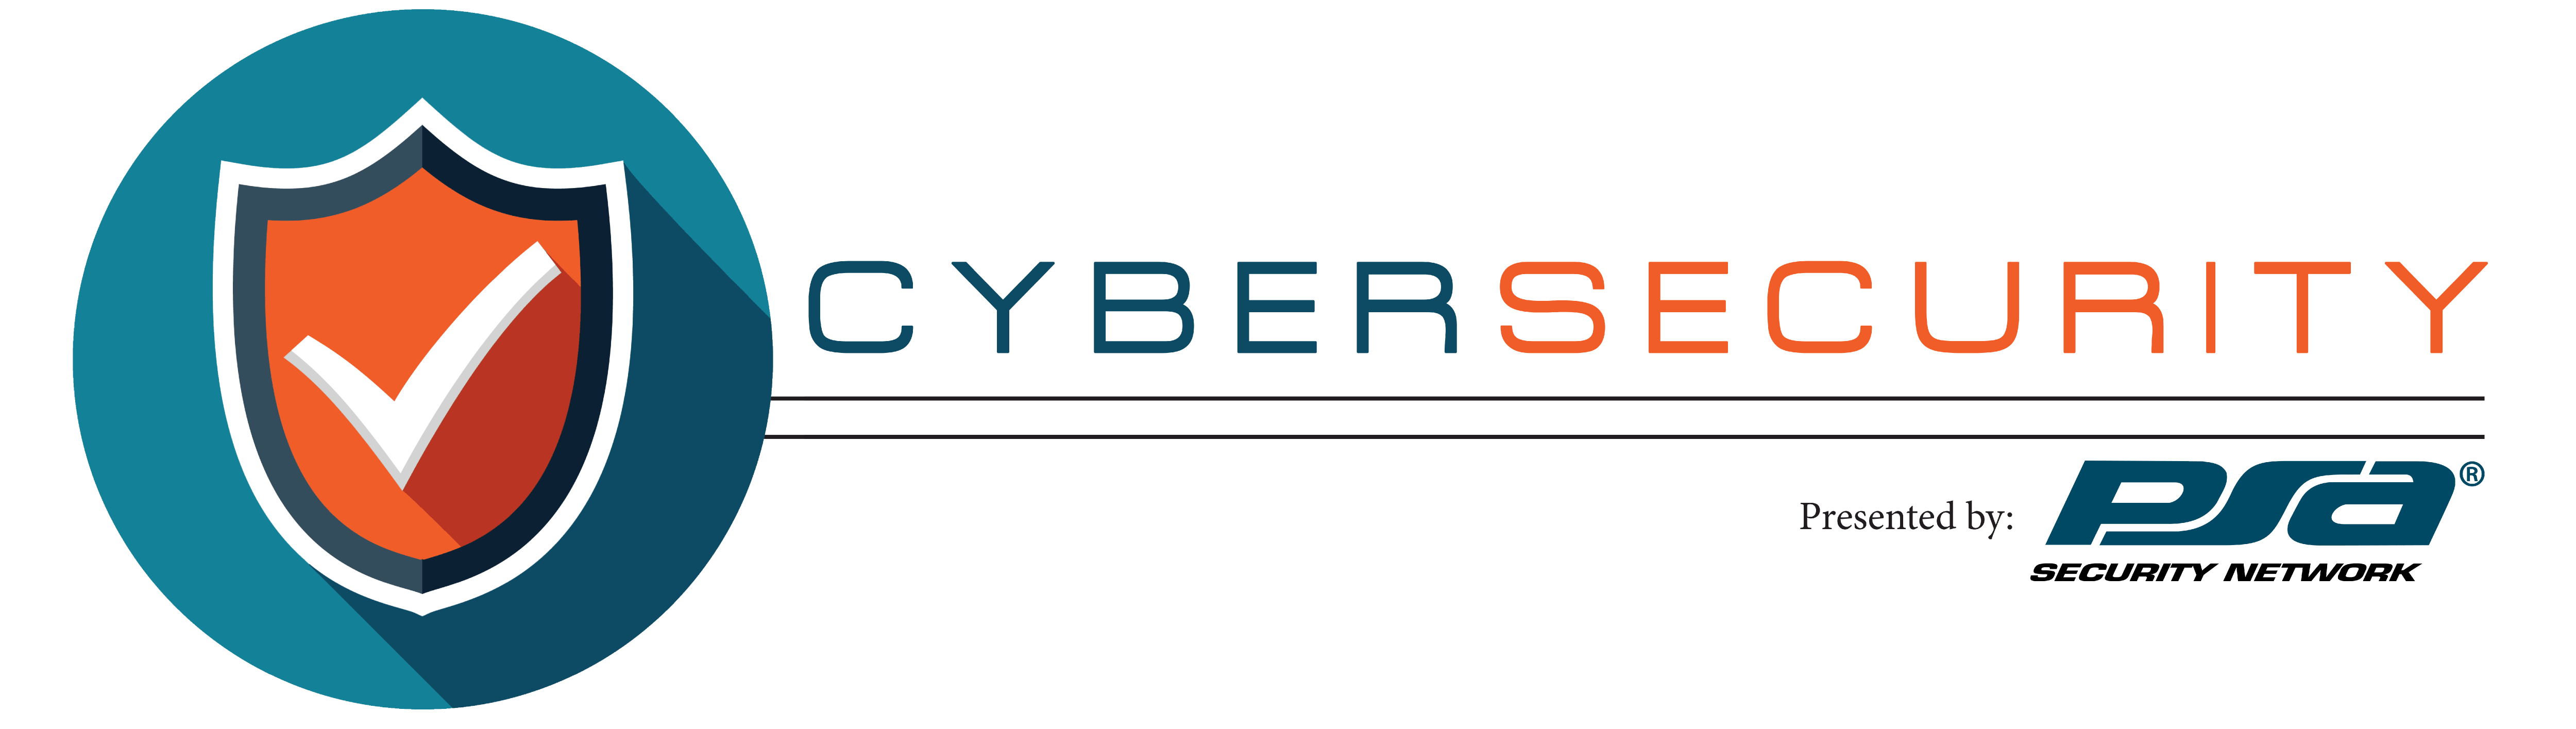 Cyber Security Logos